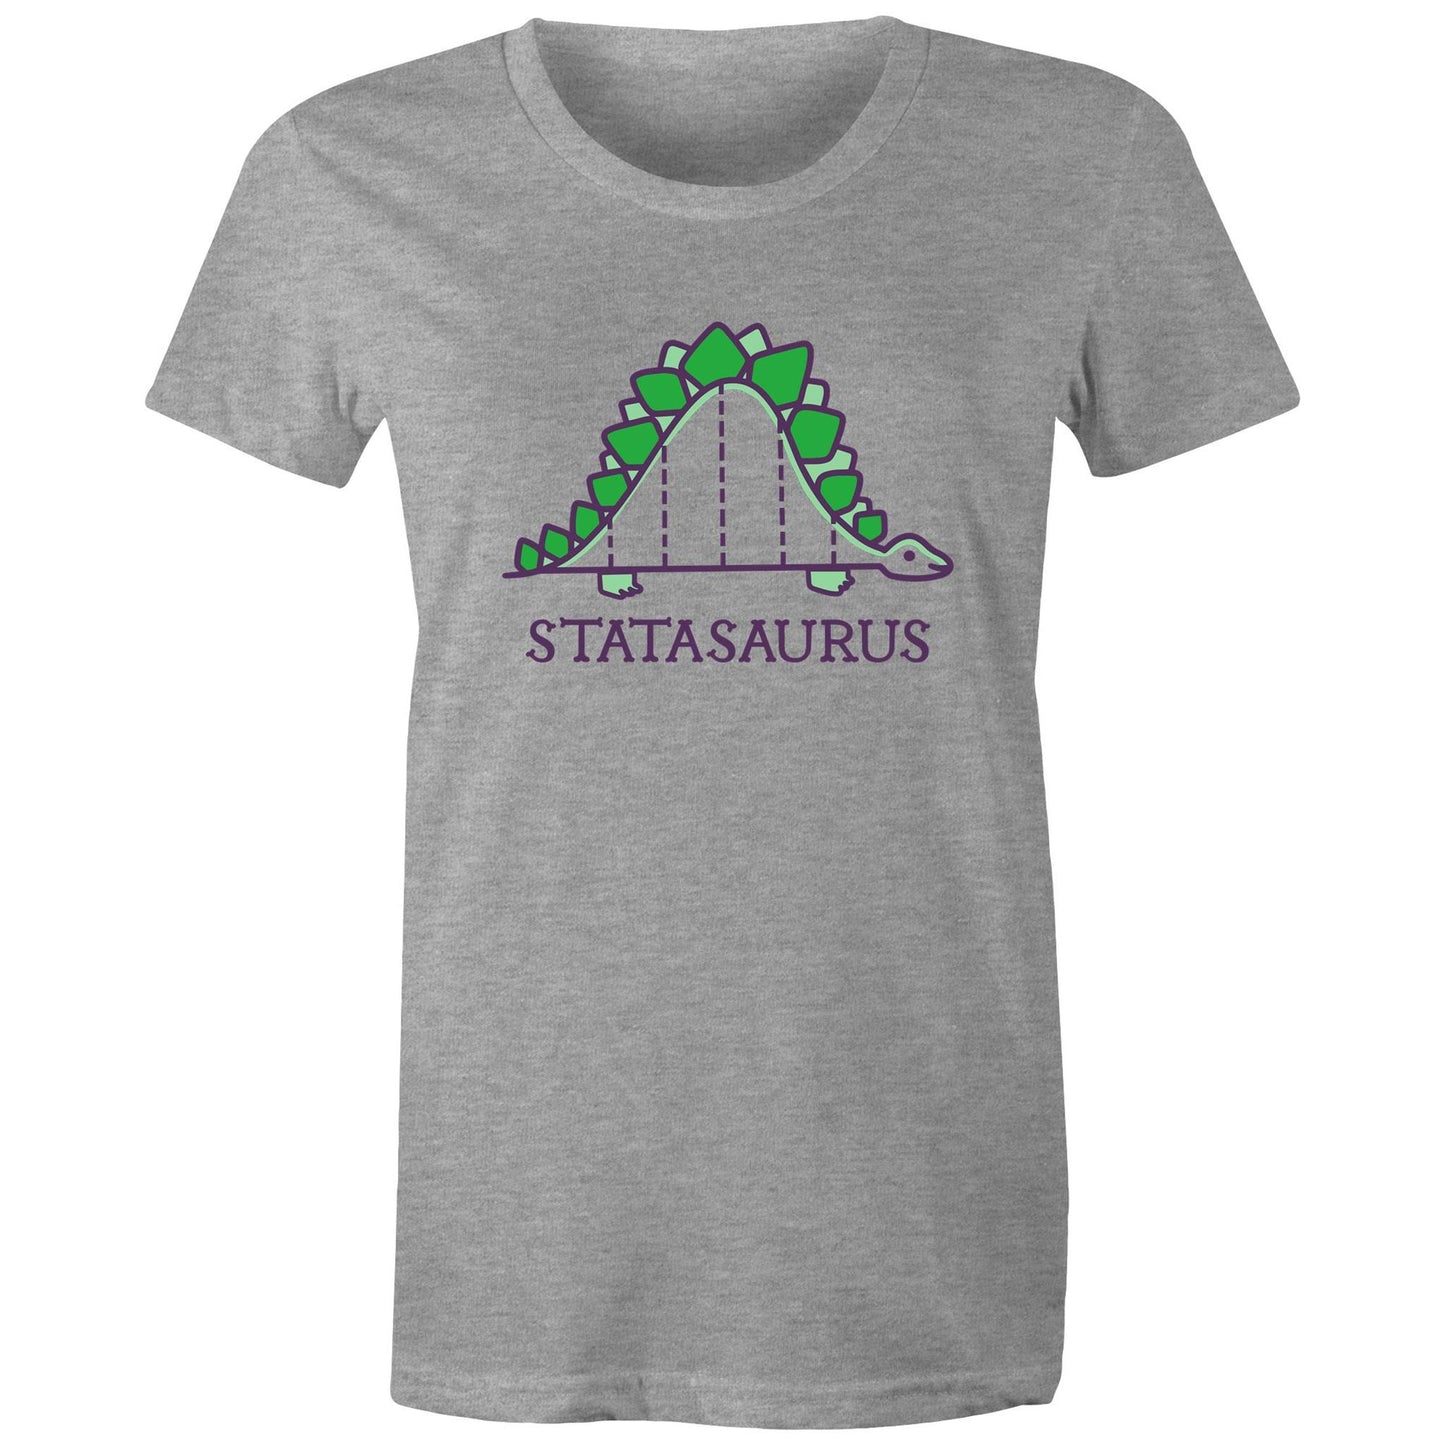 Statasaurus - Womens T-shirt Grey Marle Womens T-shirt animal Maths Science